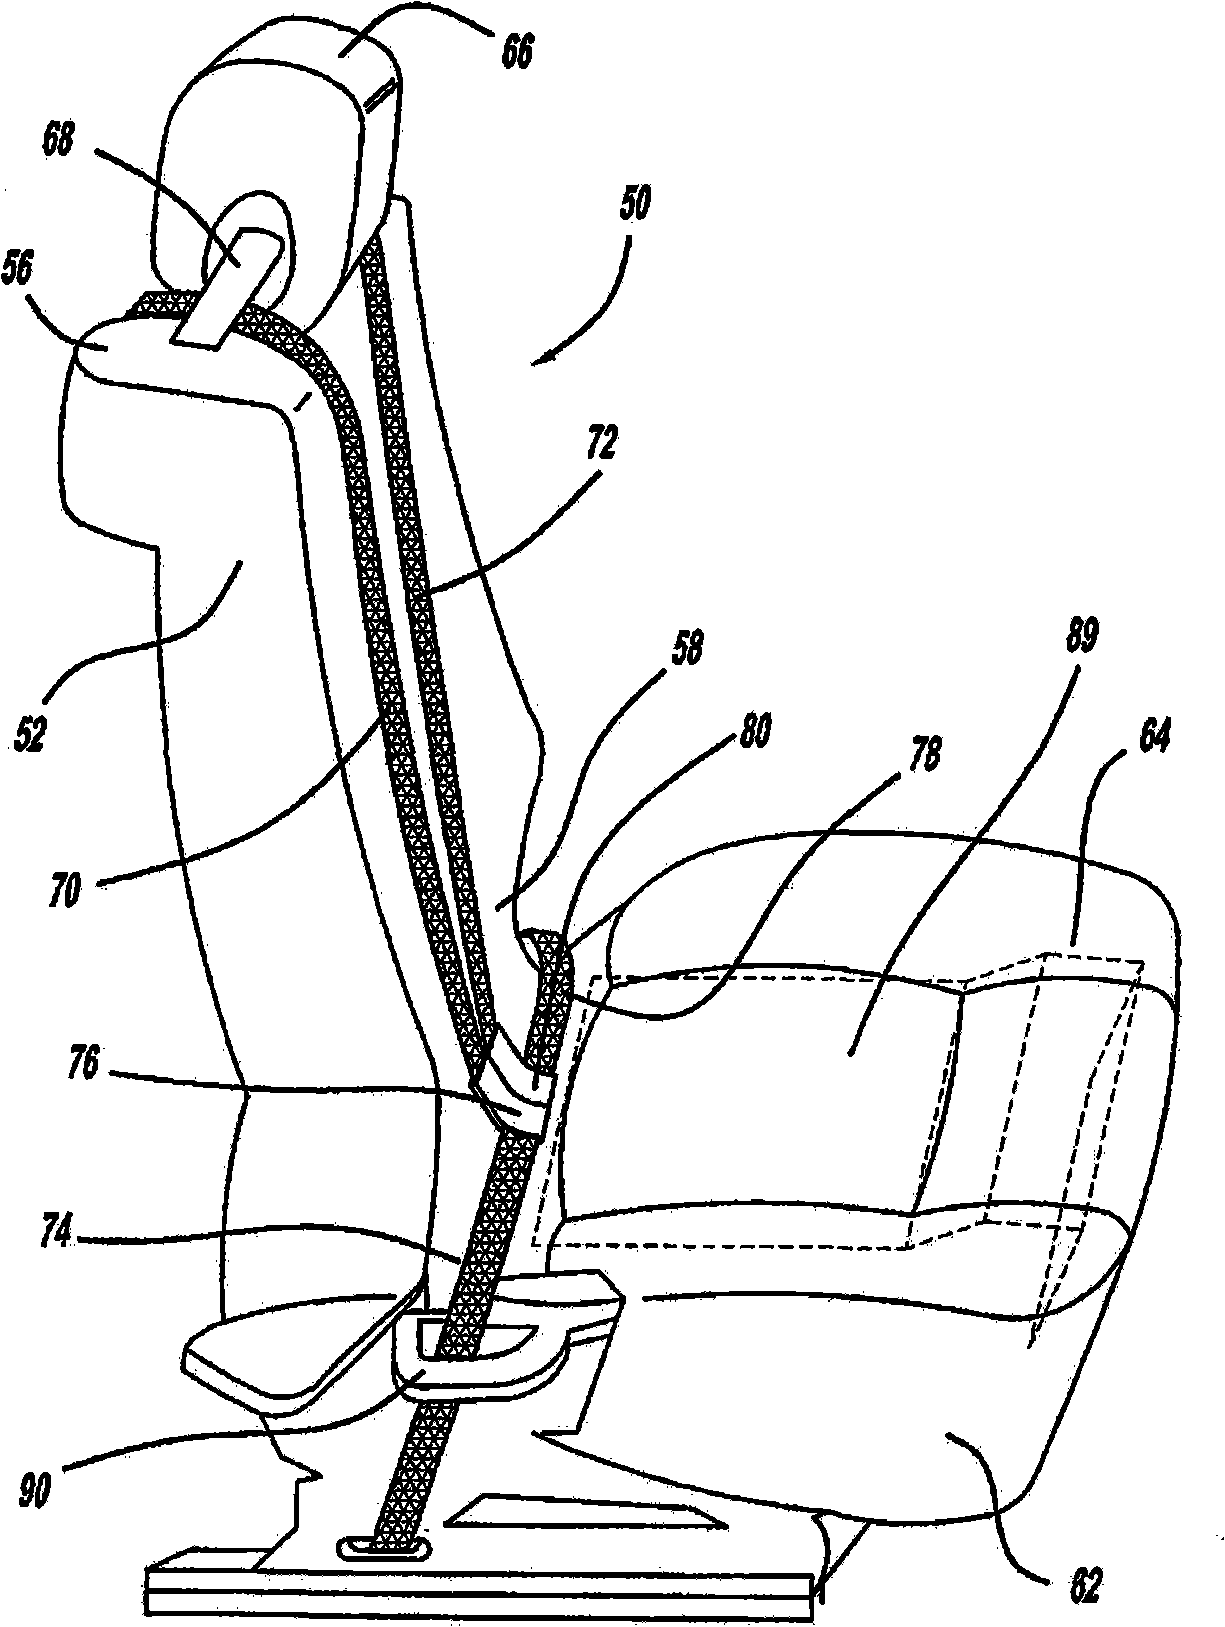 Four point seat belt system